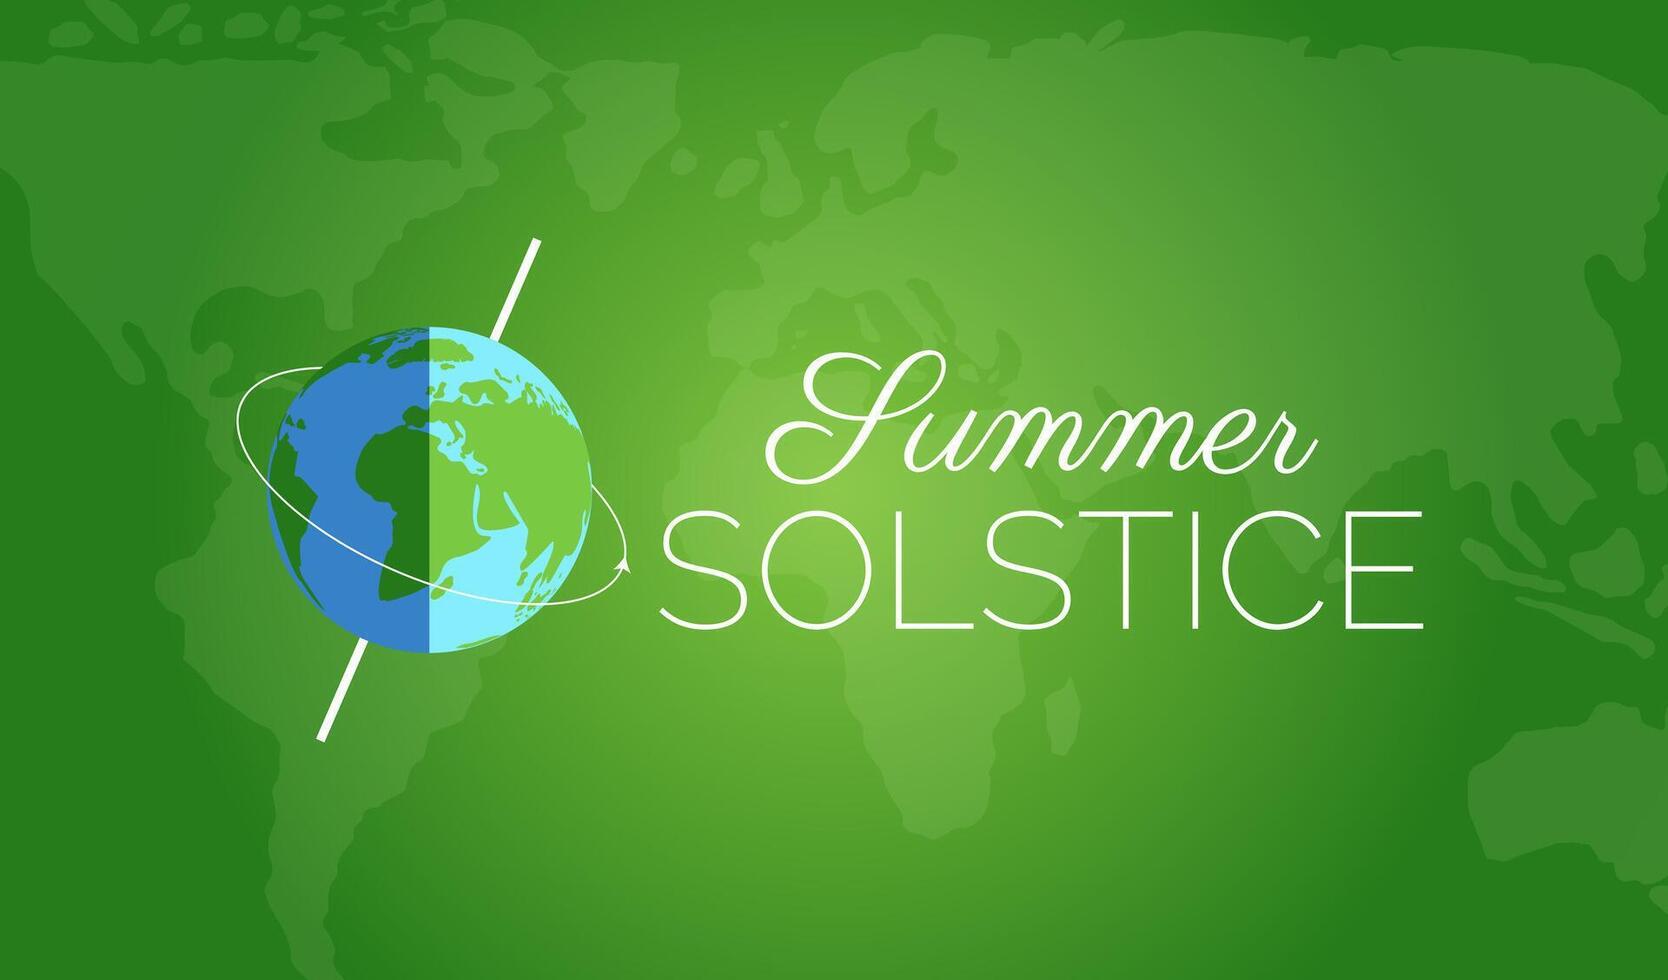 zomer zonnestilstand achtergrond illustratie vector